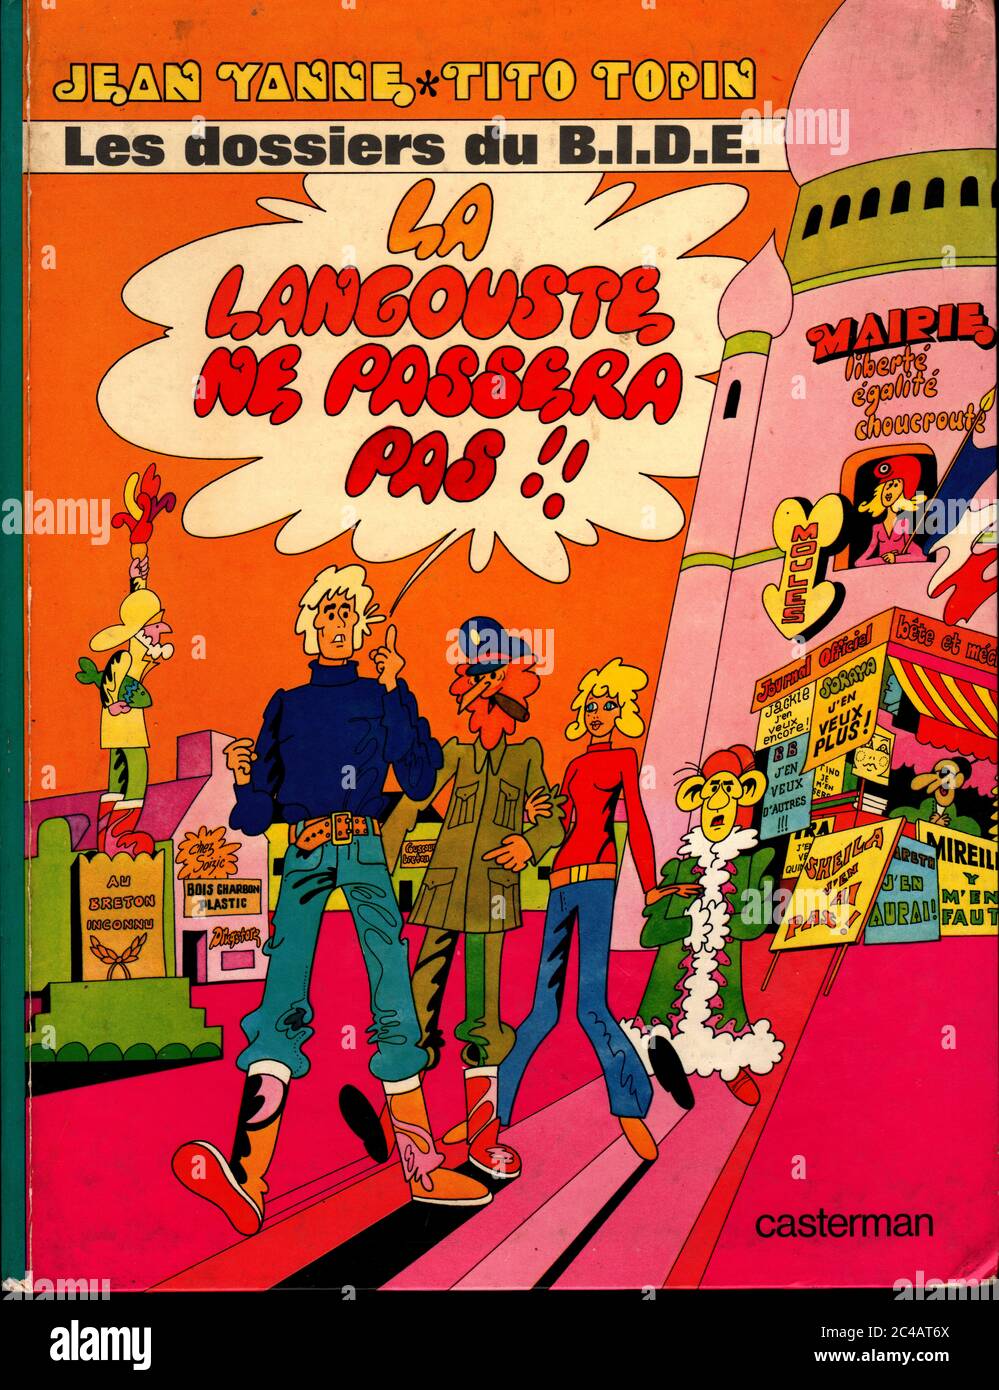 Jean Yanne - Tito Topin les dossiers du BIDE - La langouste ne passera pas - bande dessinee Casterman 1969 / Lobster will not pass -  comic strip Stock Photo